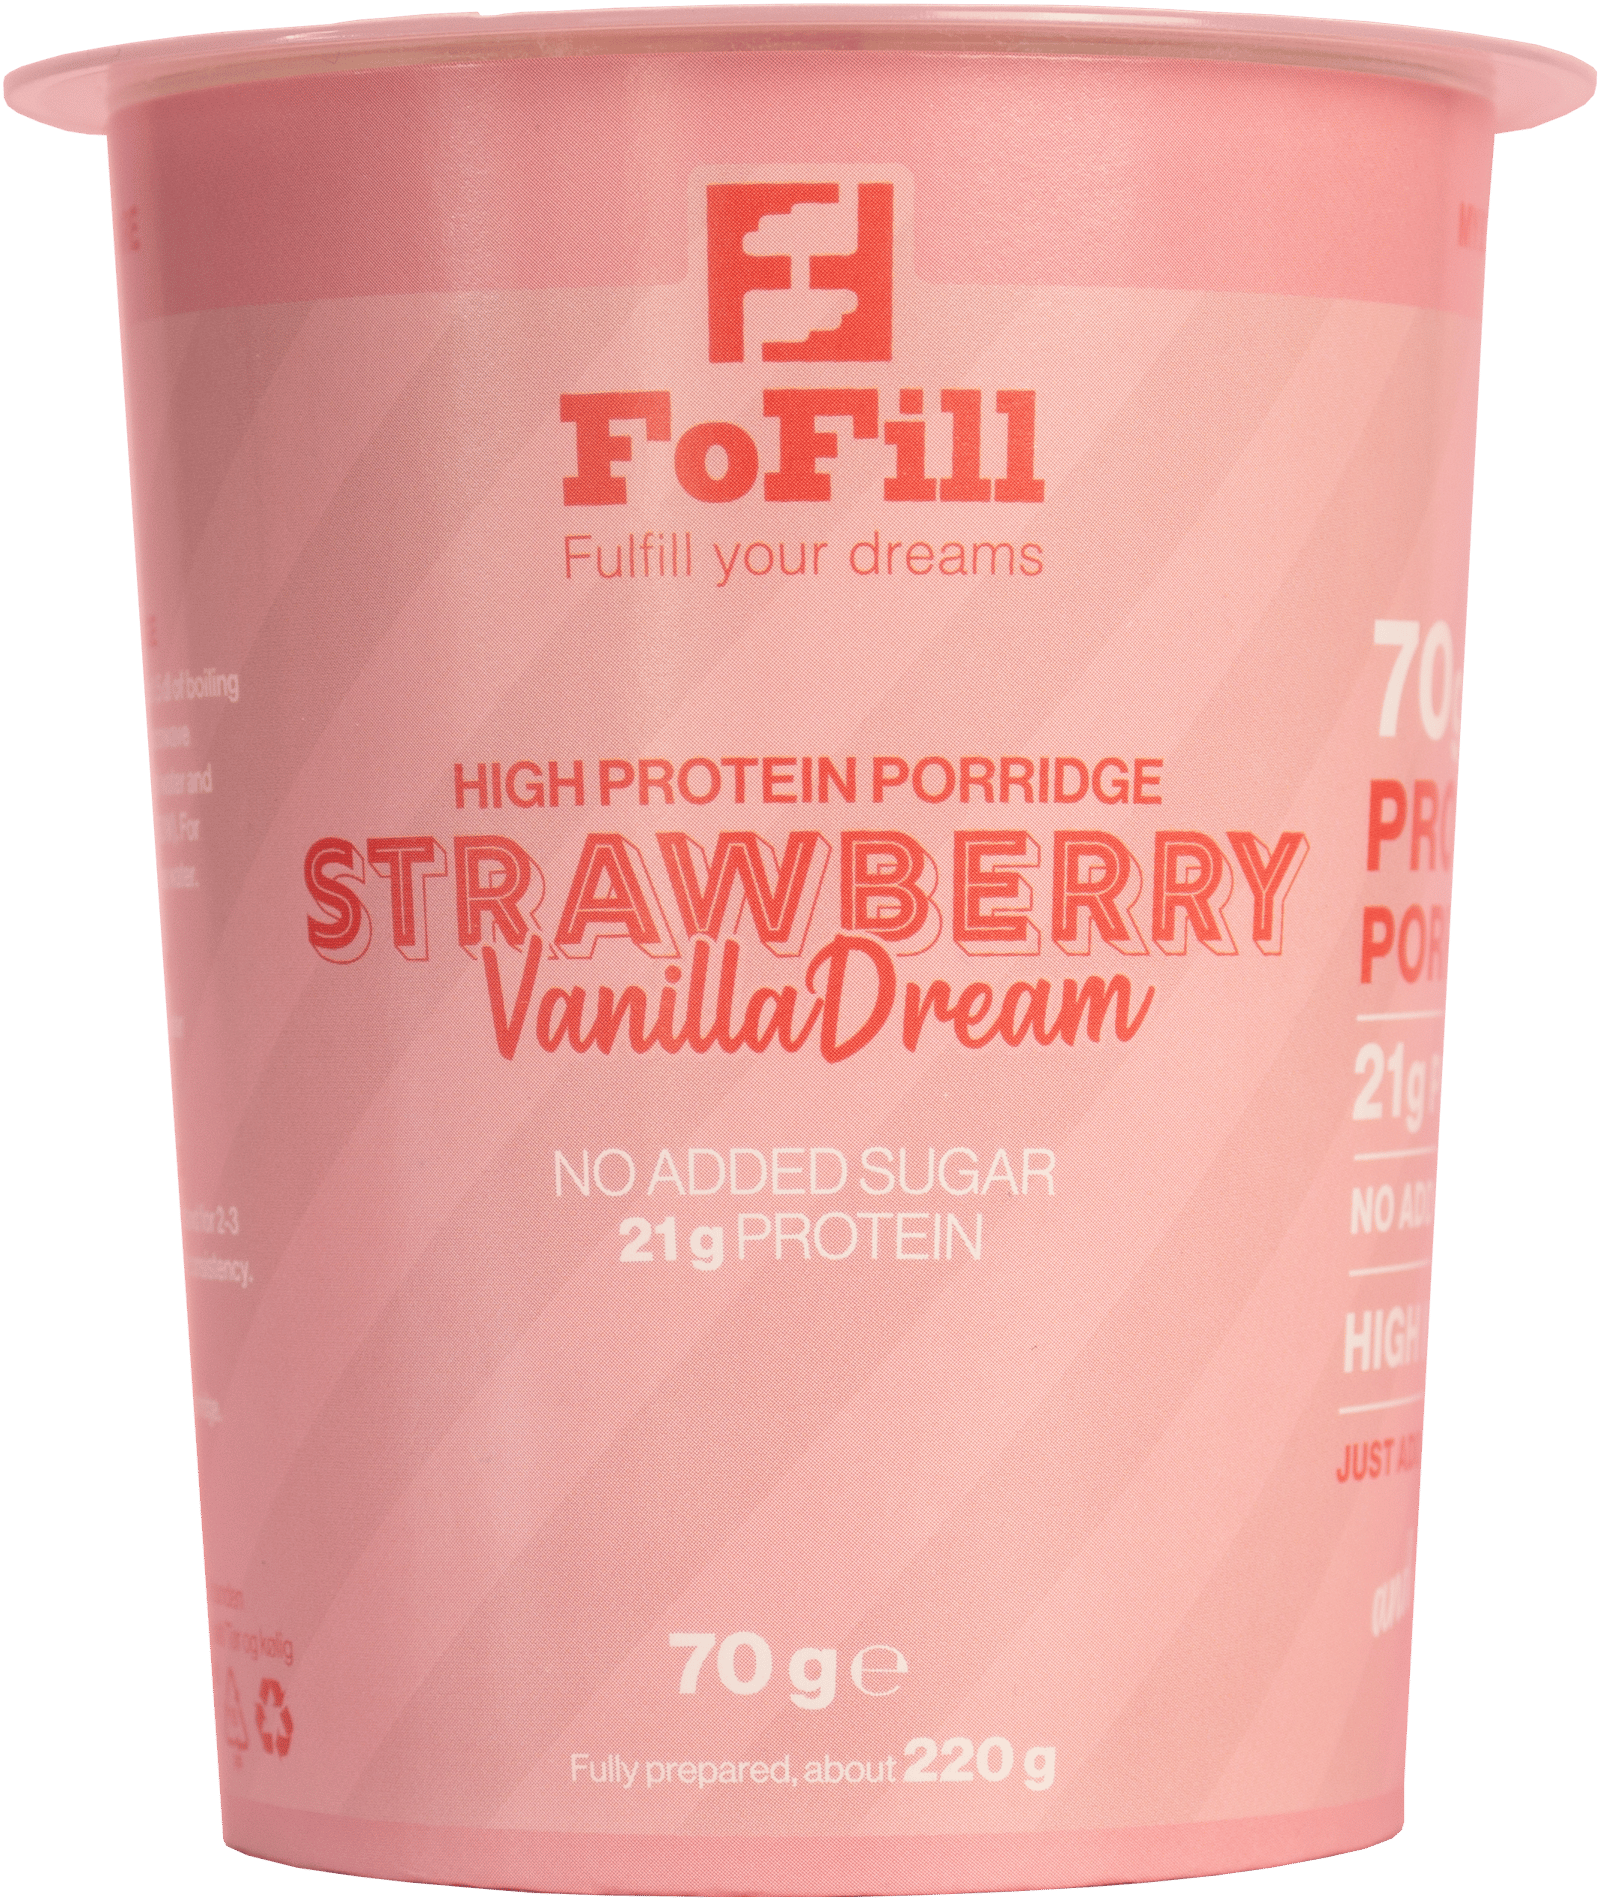 FoFill Strawberry VanillaDream Proteingröt 70g